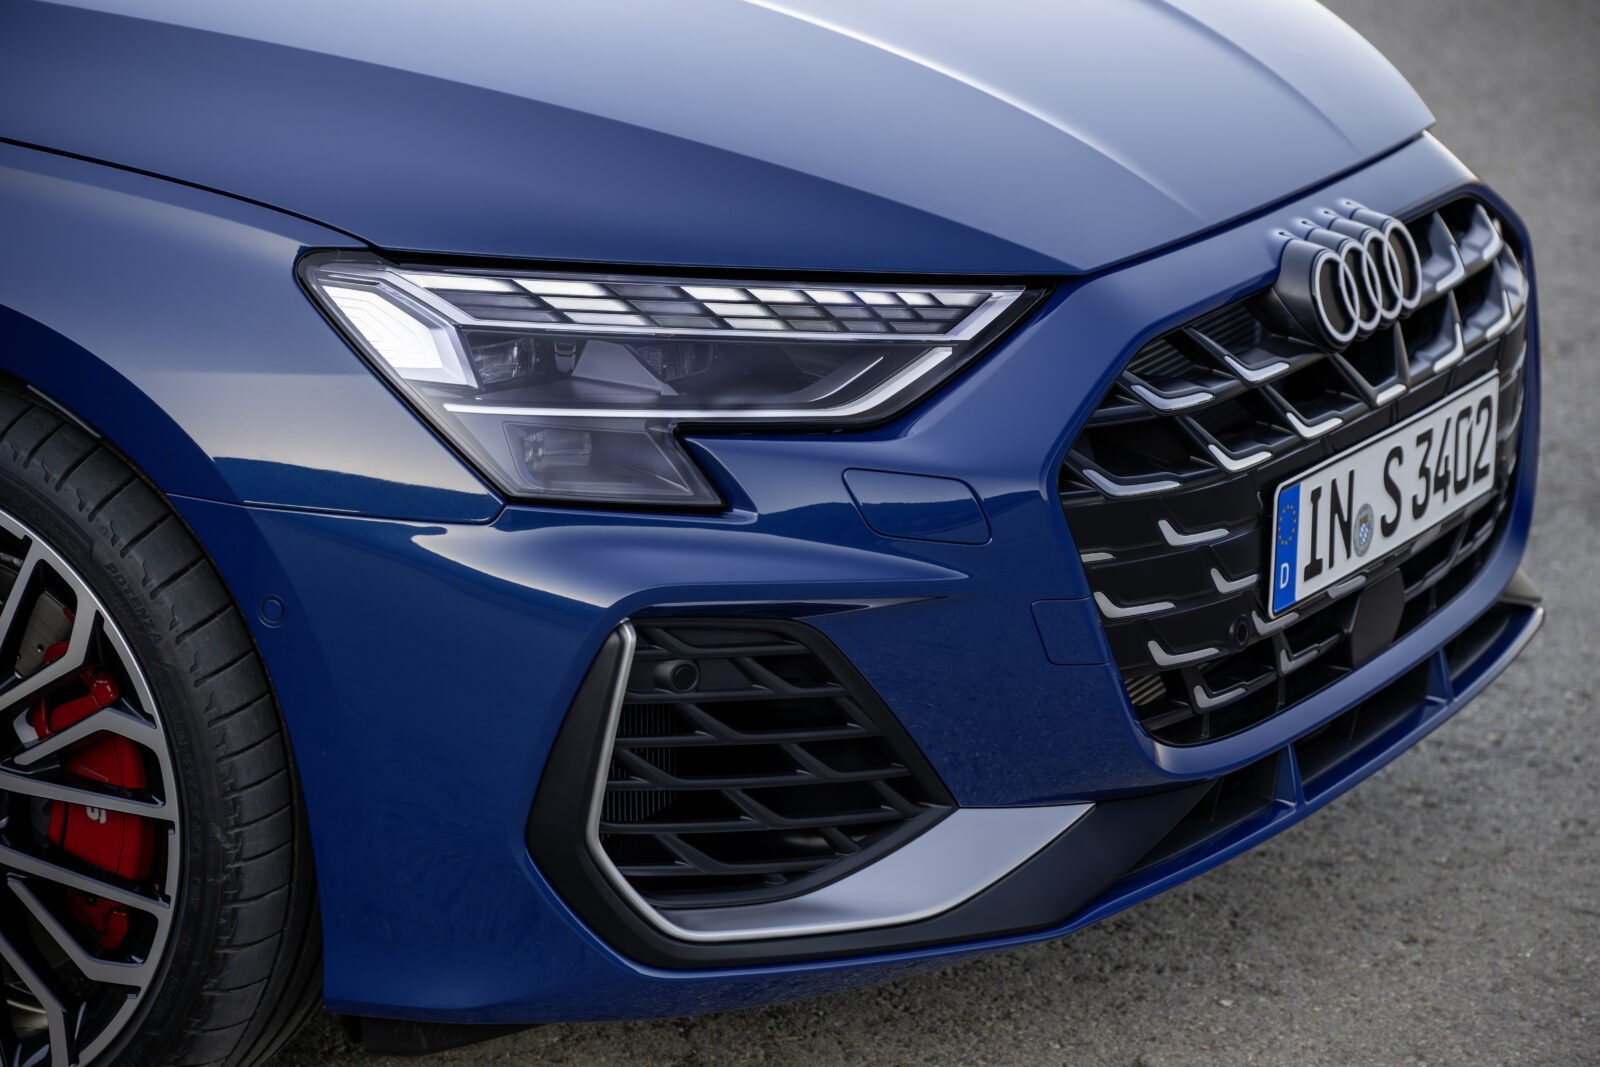 Audi S3 facelift